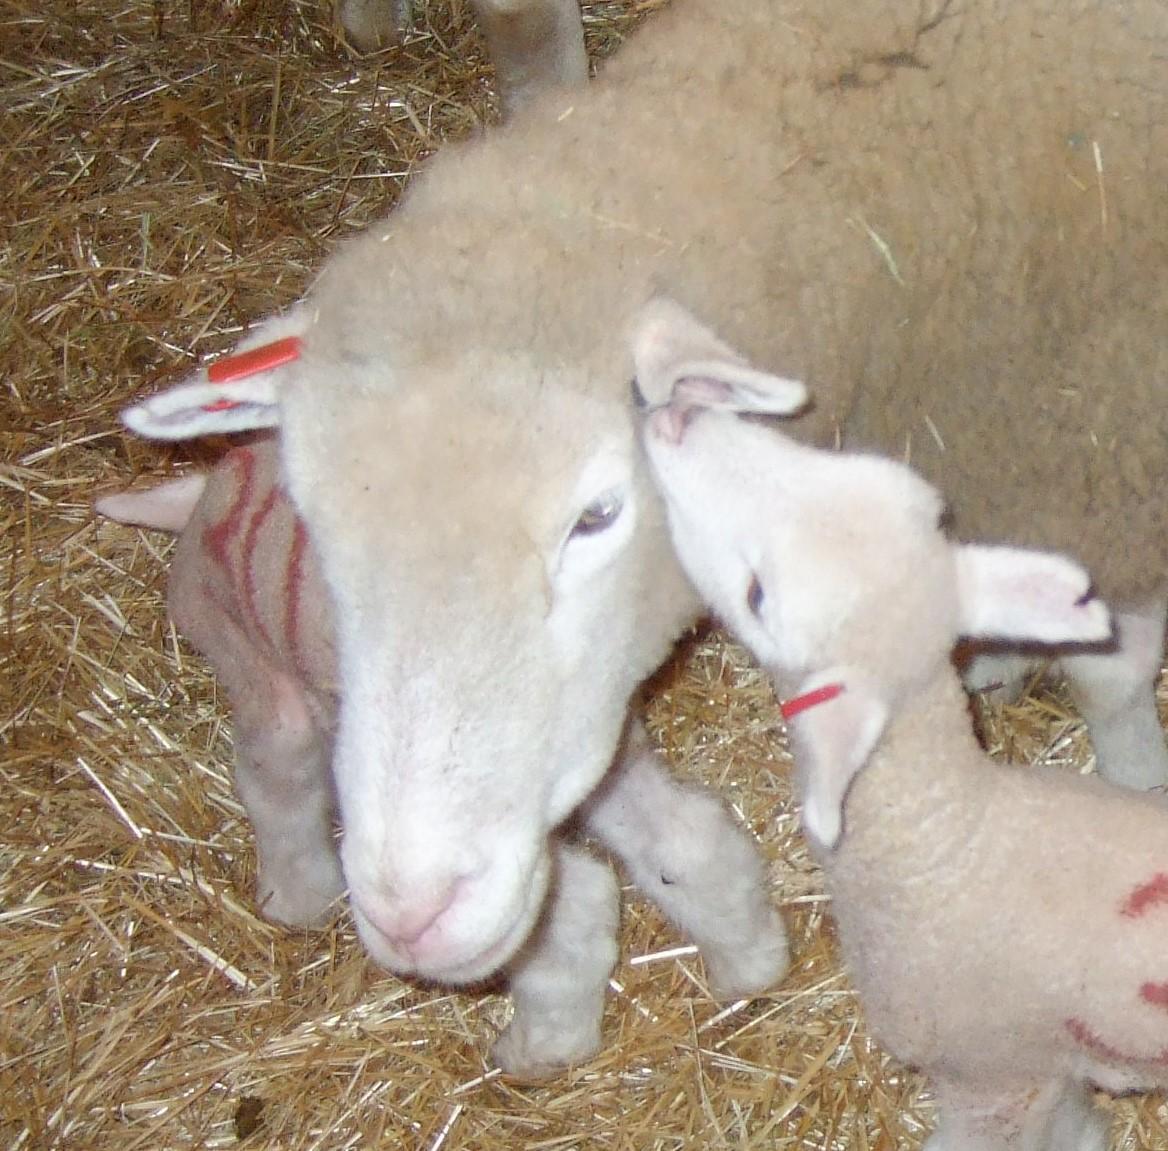 Sheep 201: Care of newborn lambs